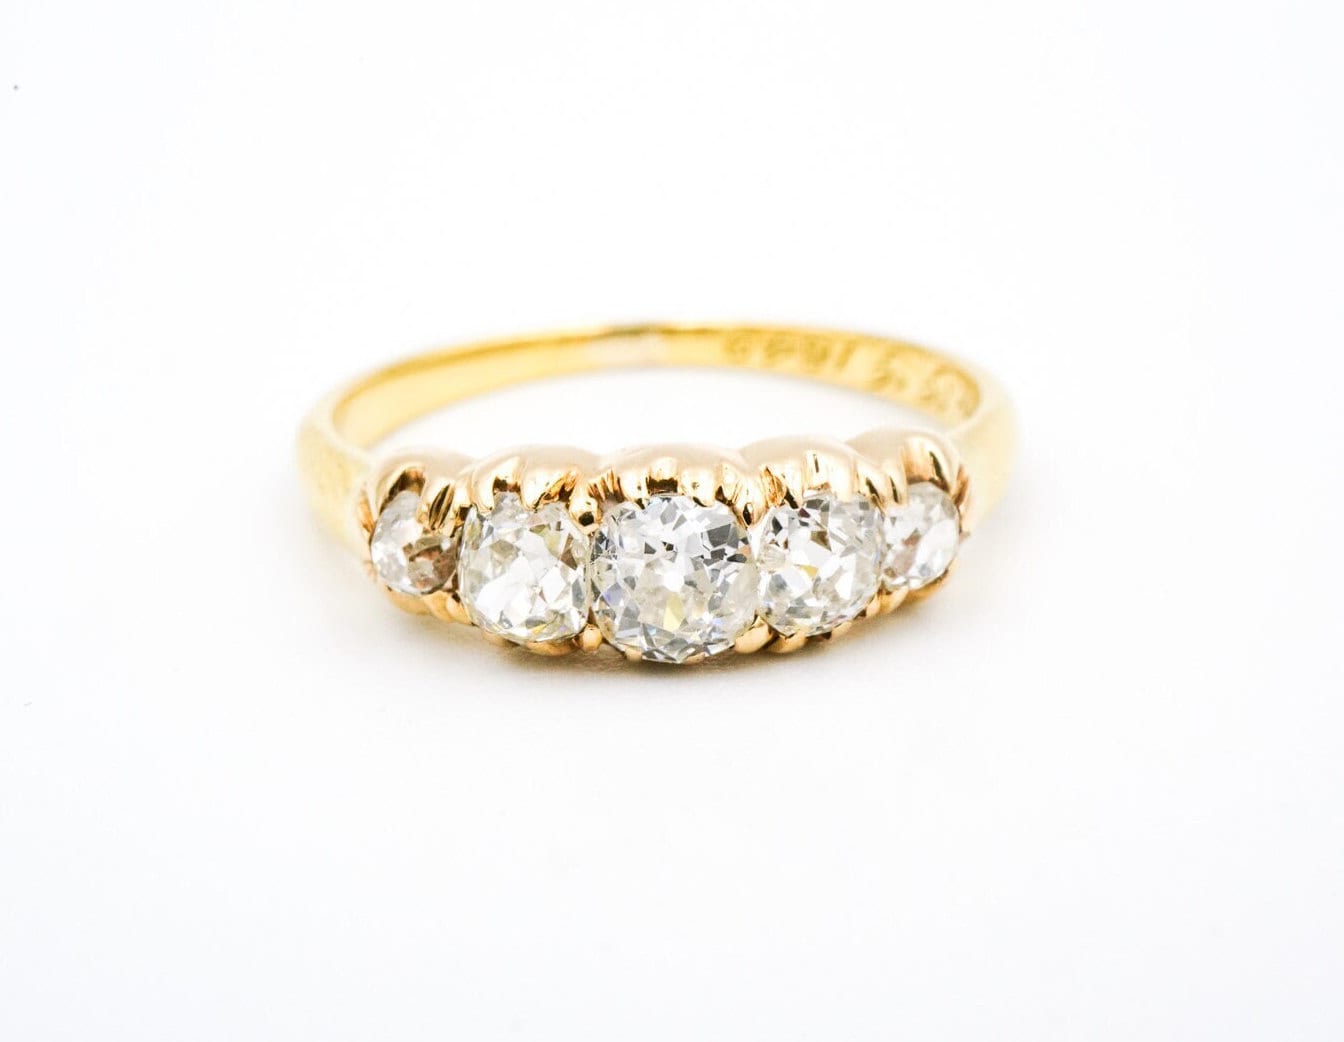 Victorian 14K Yellow Gold & Old Mine Cut Diamond Ring - Size 5 1/4